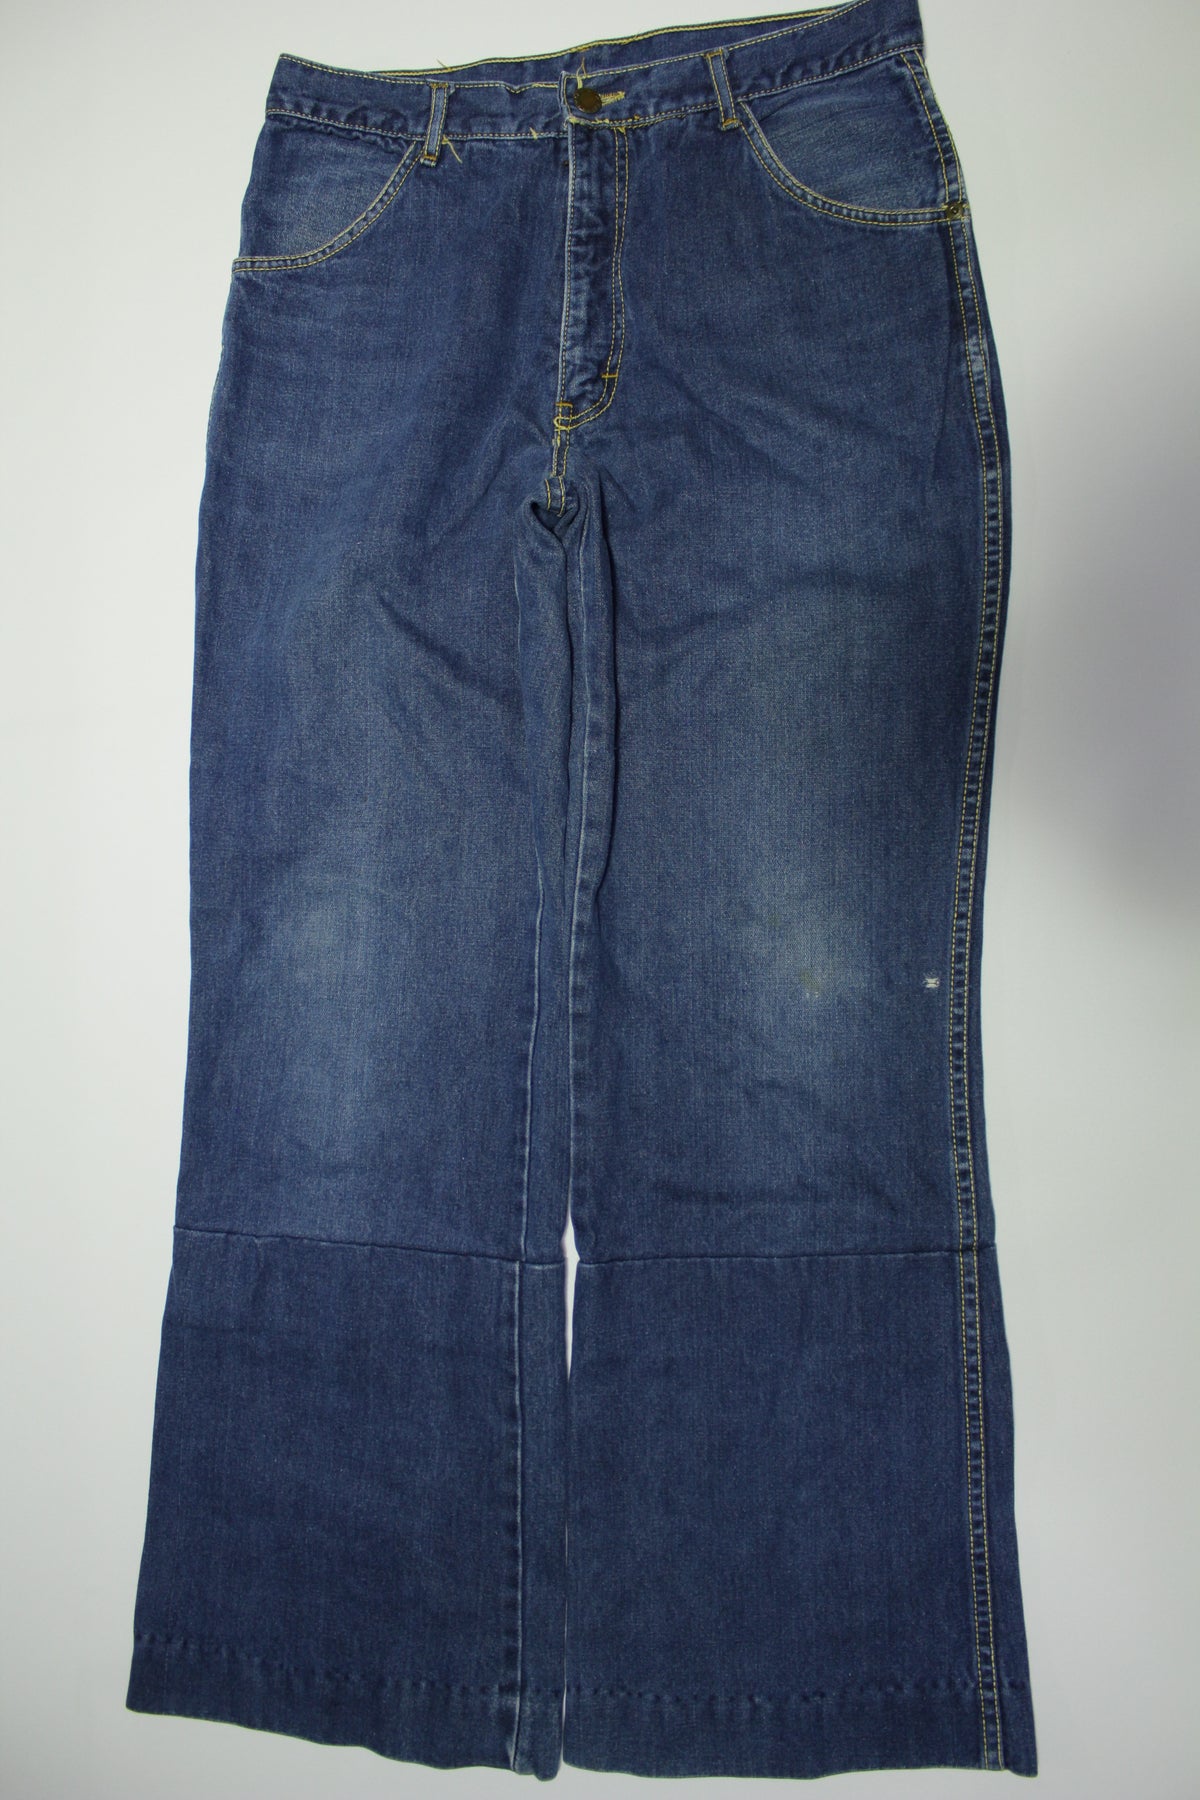 Brittania Vintage 70's Flare Bell Bottom Denim Blue Jeans